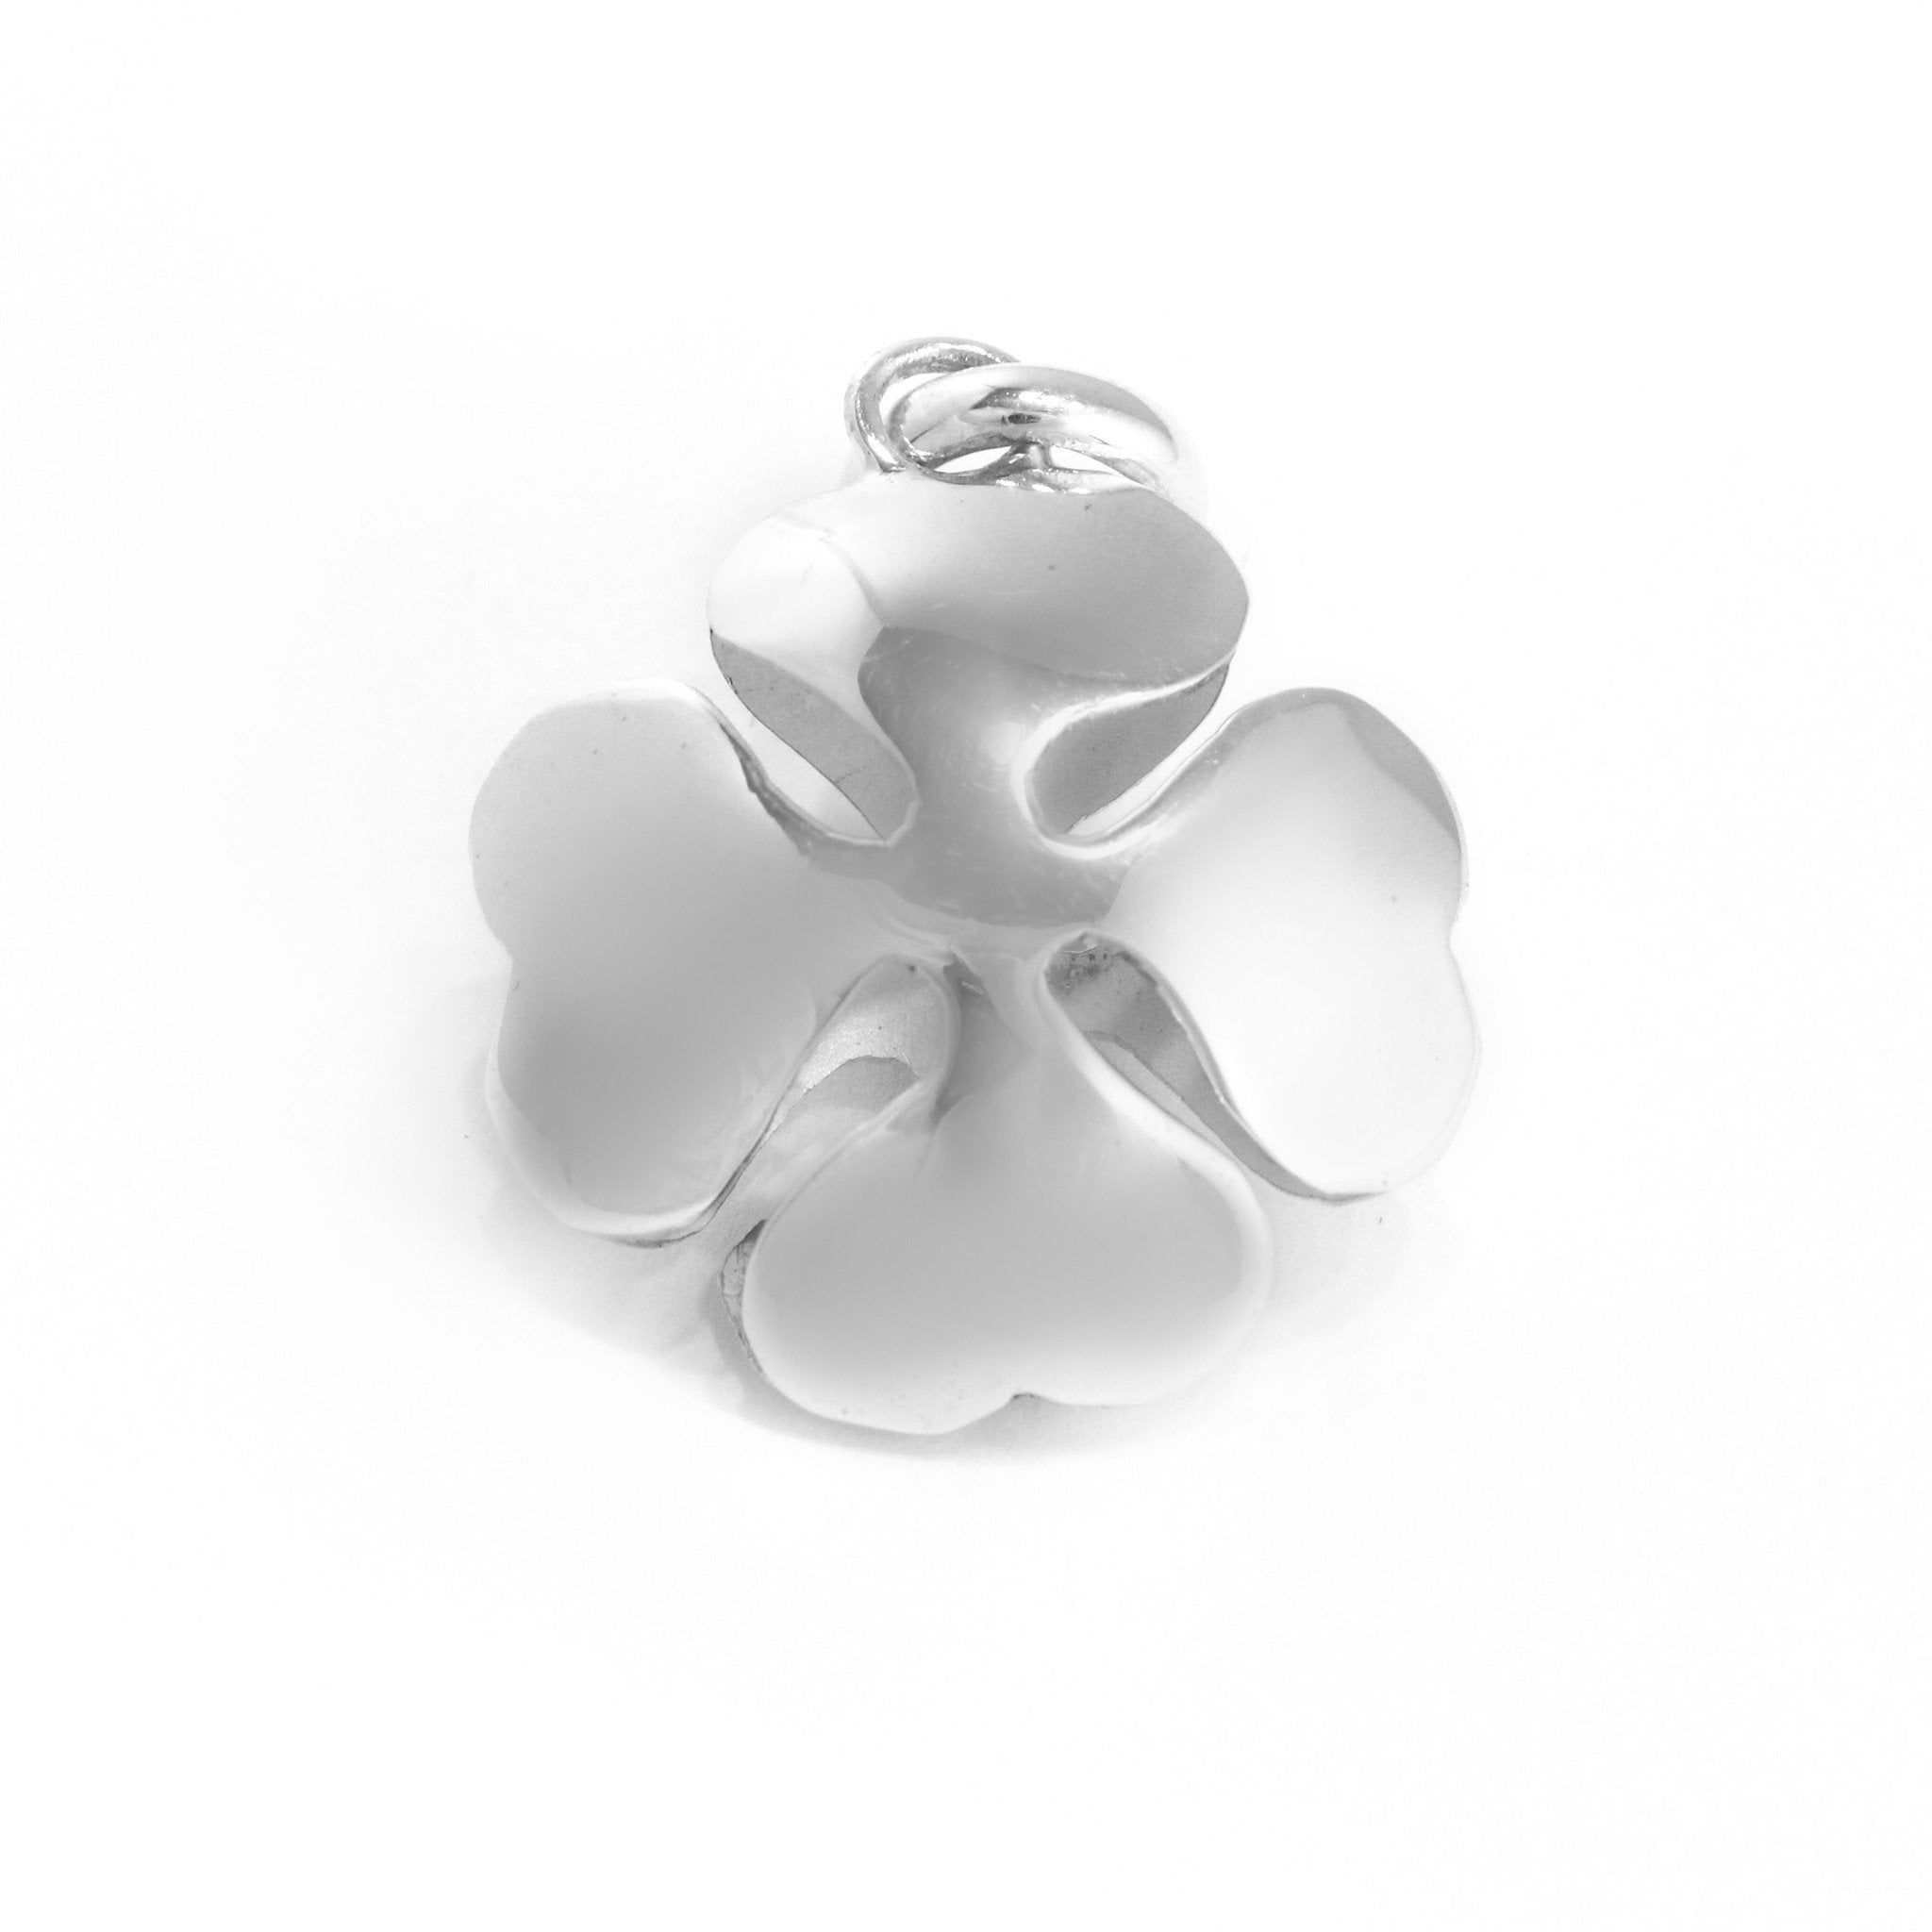 Sterling Silver Four Leaf Clover Necklace